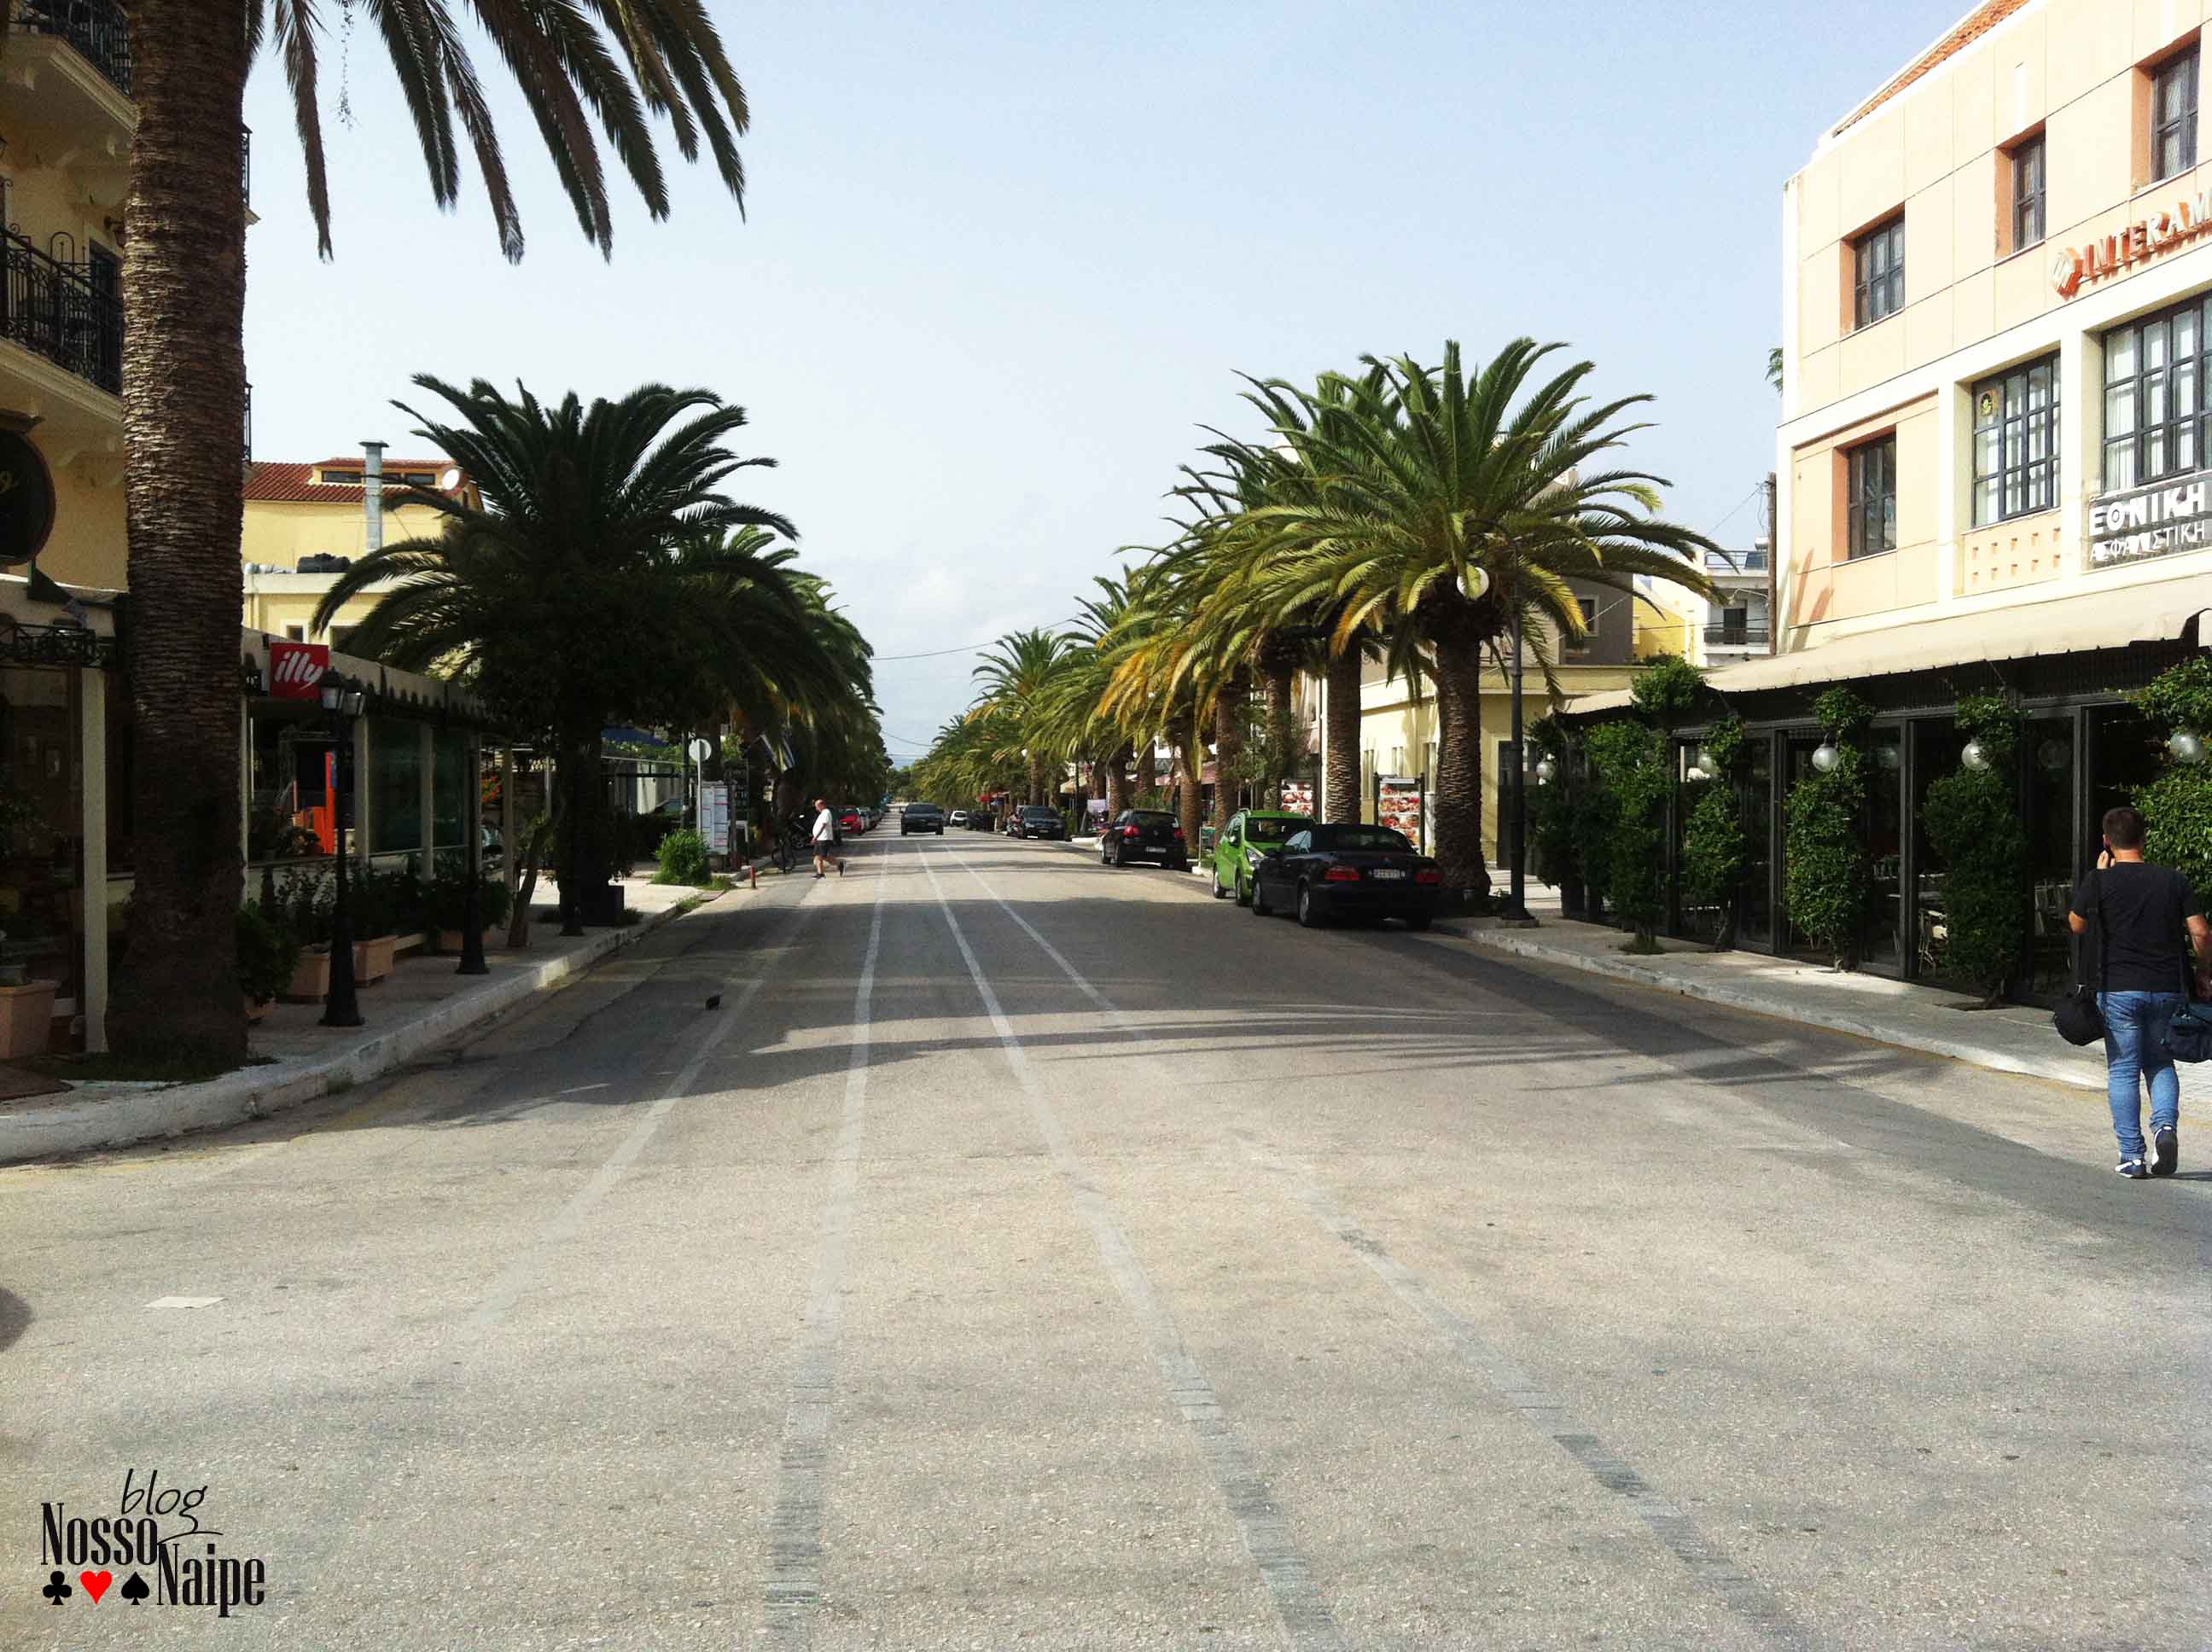 Palm Street